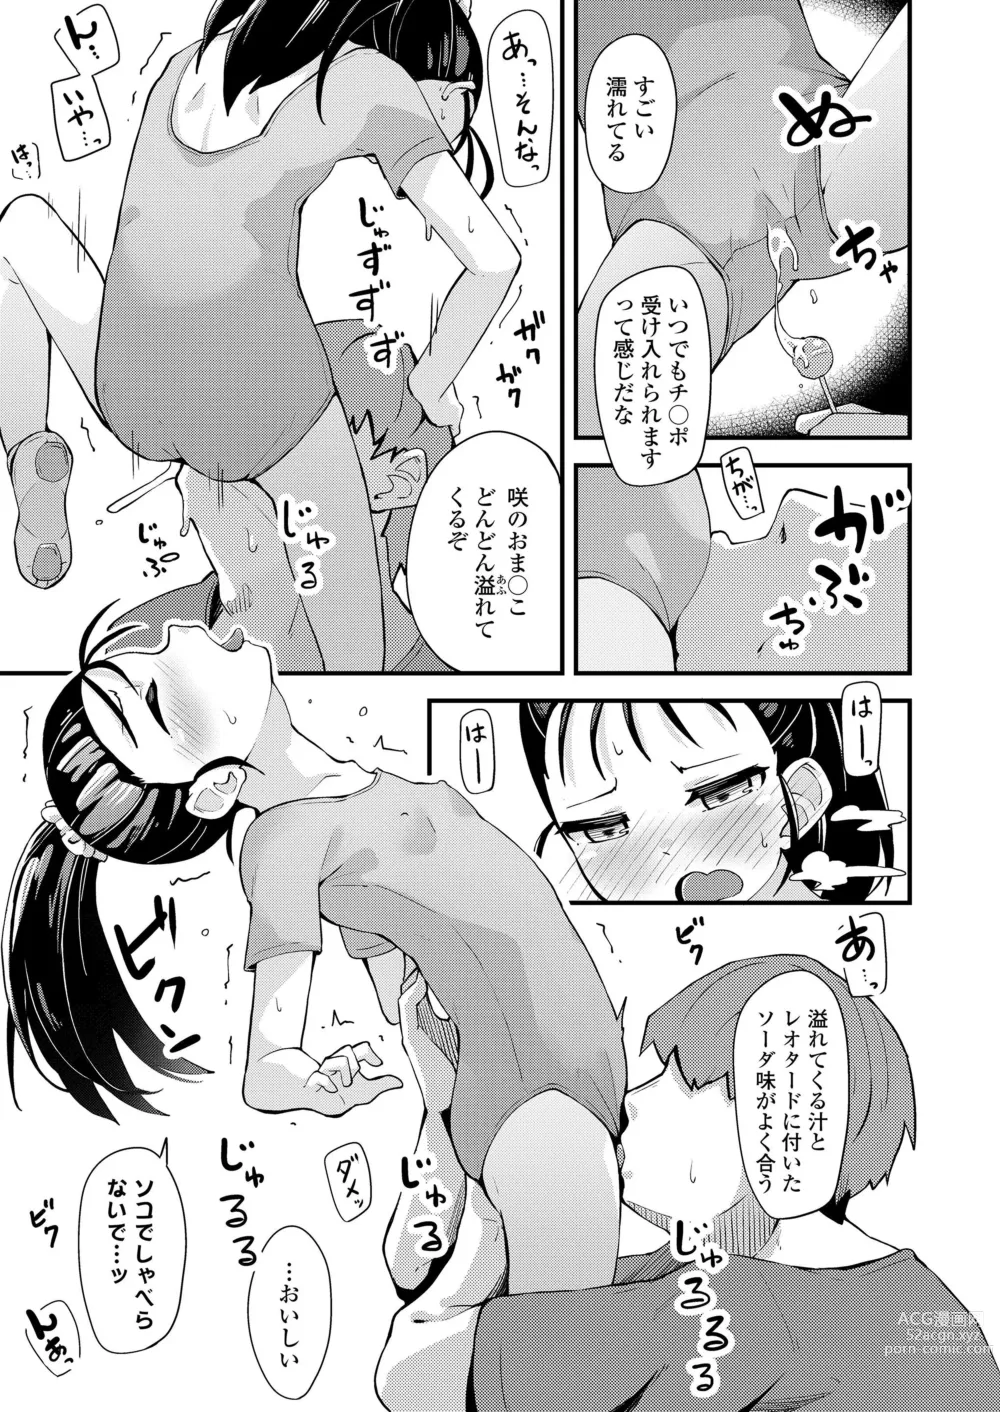 Page 9 of manga Ani to Odoru